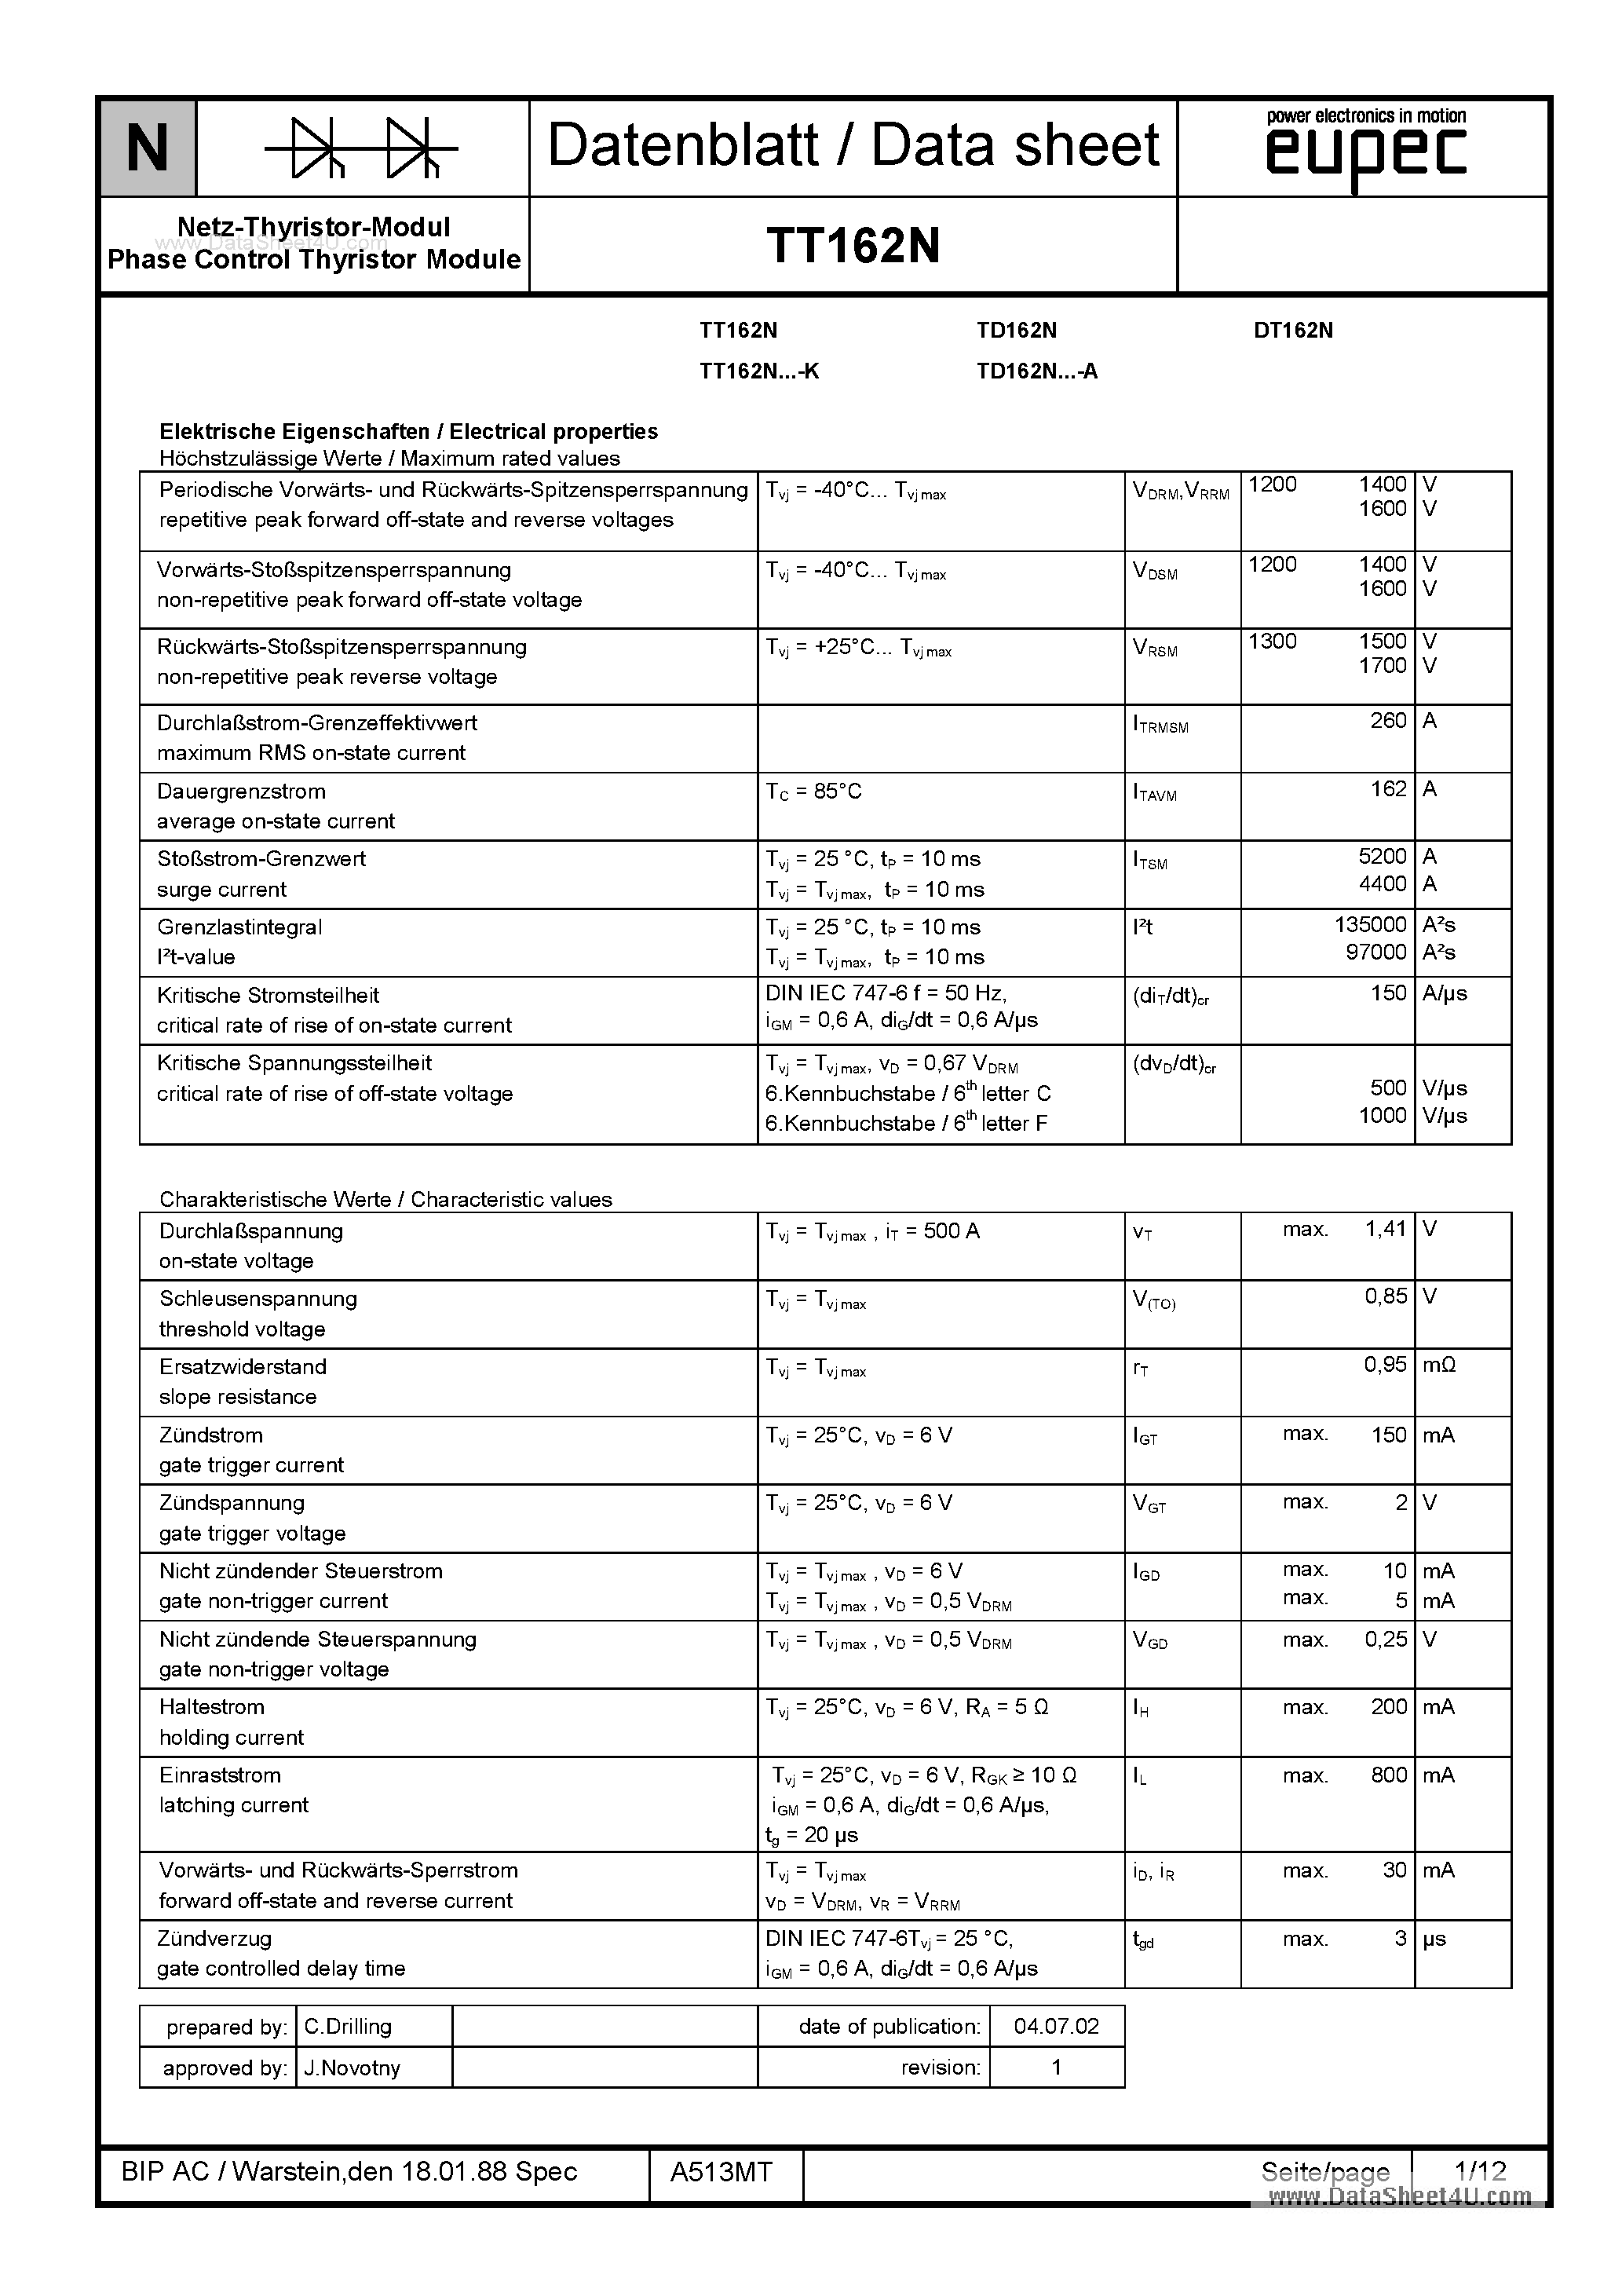 Datasheet TD162N - SCR page 1